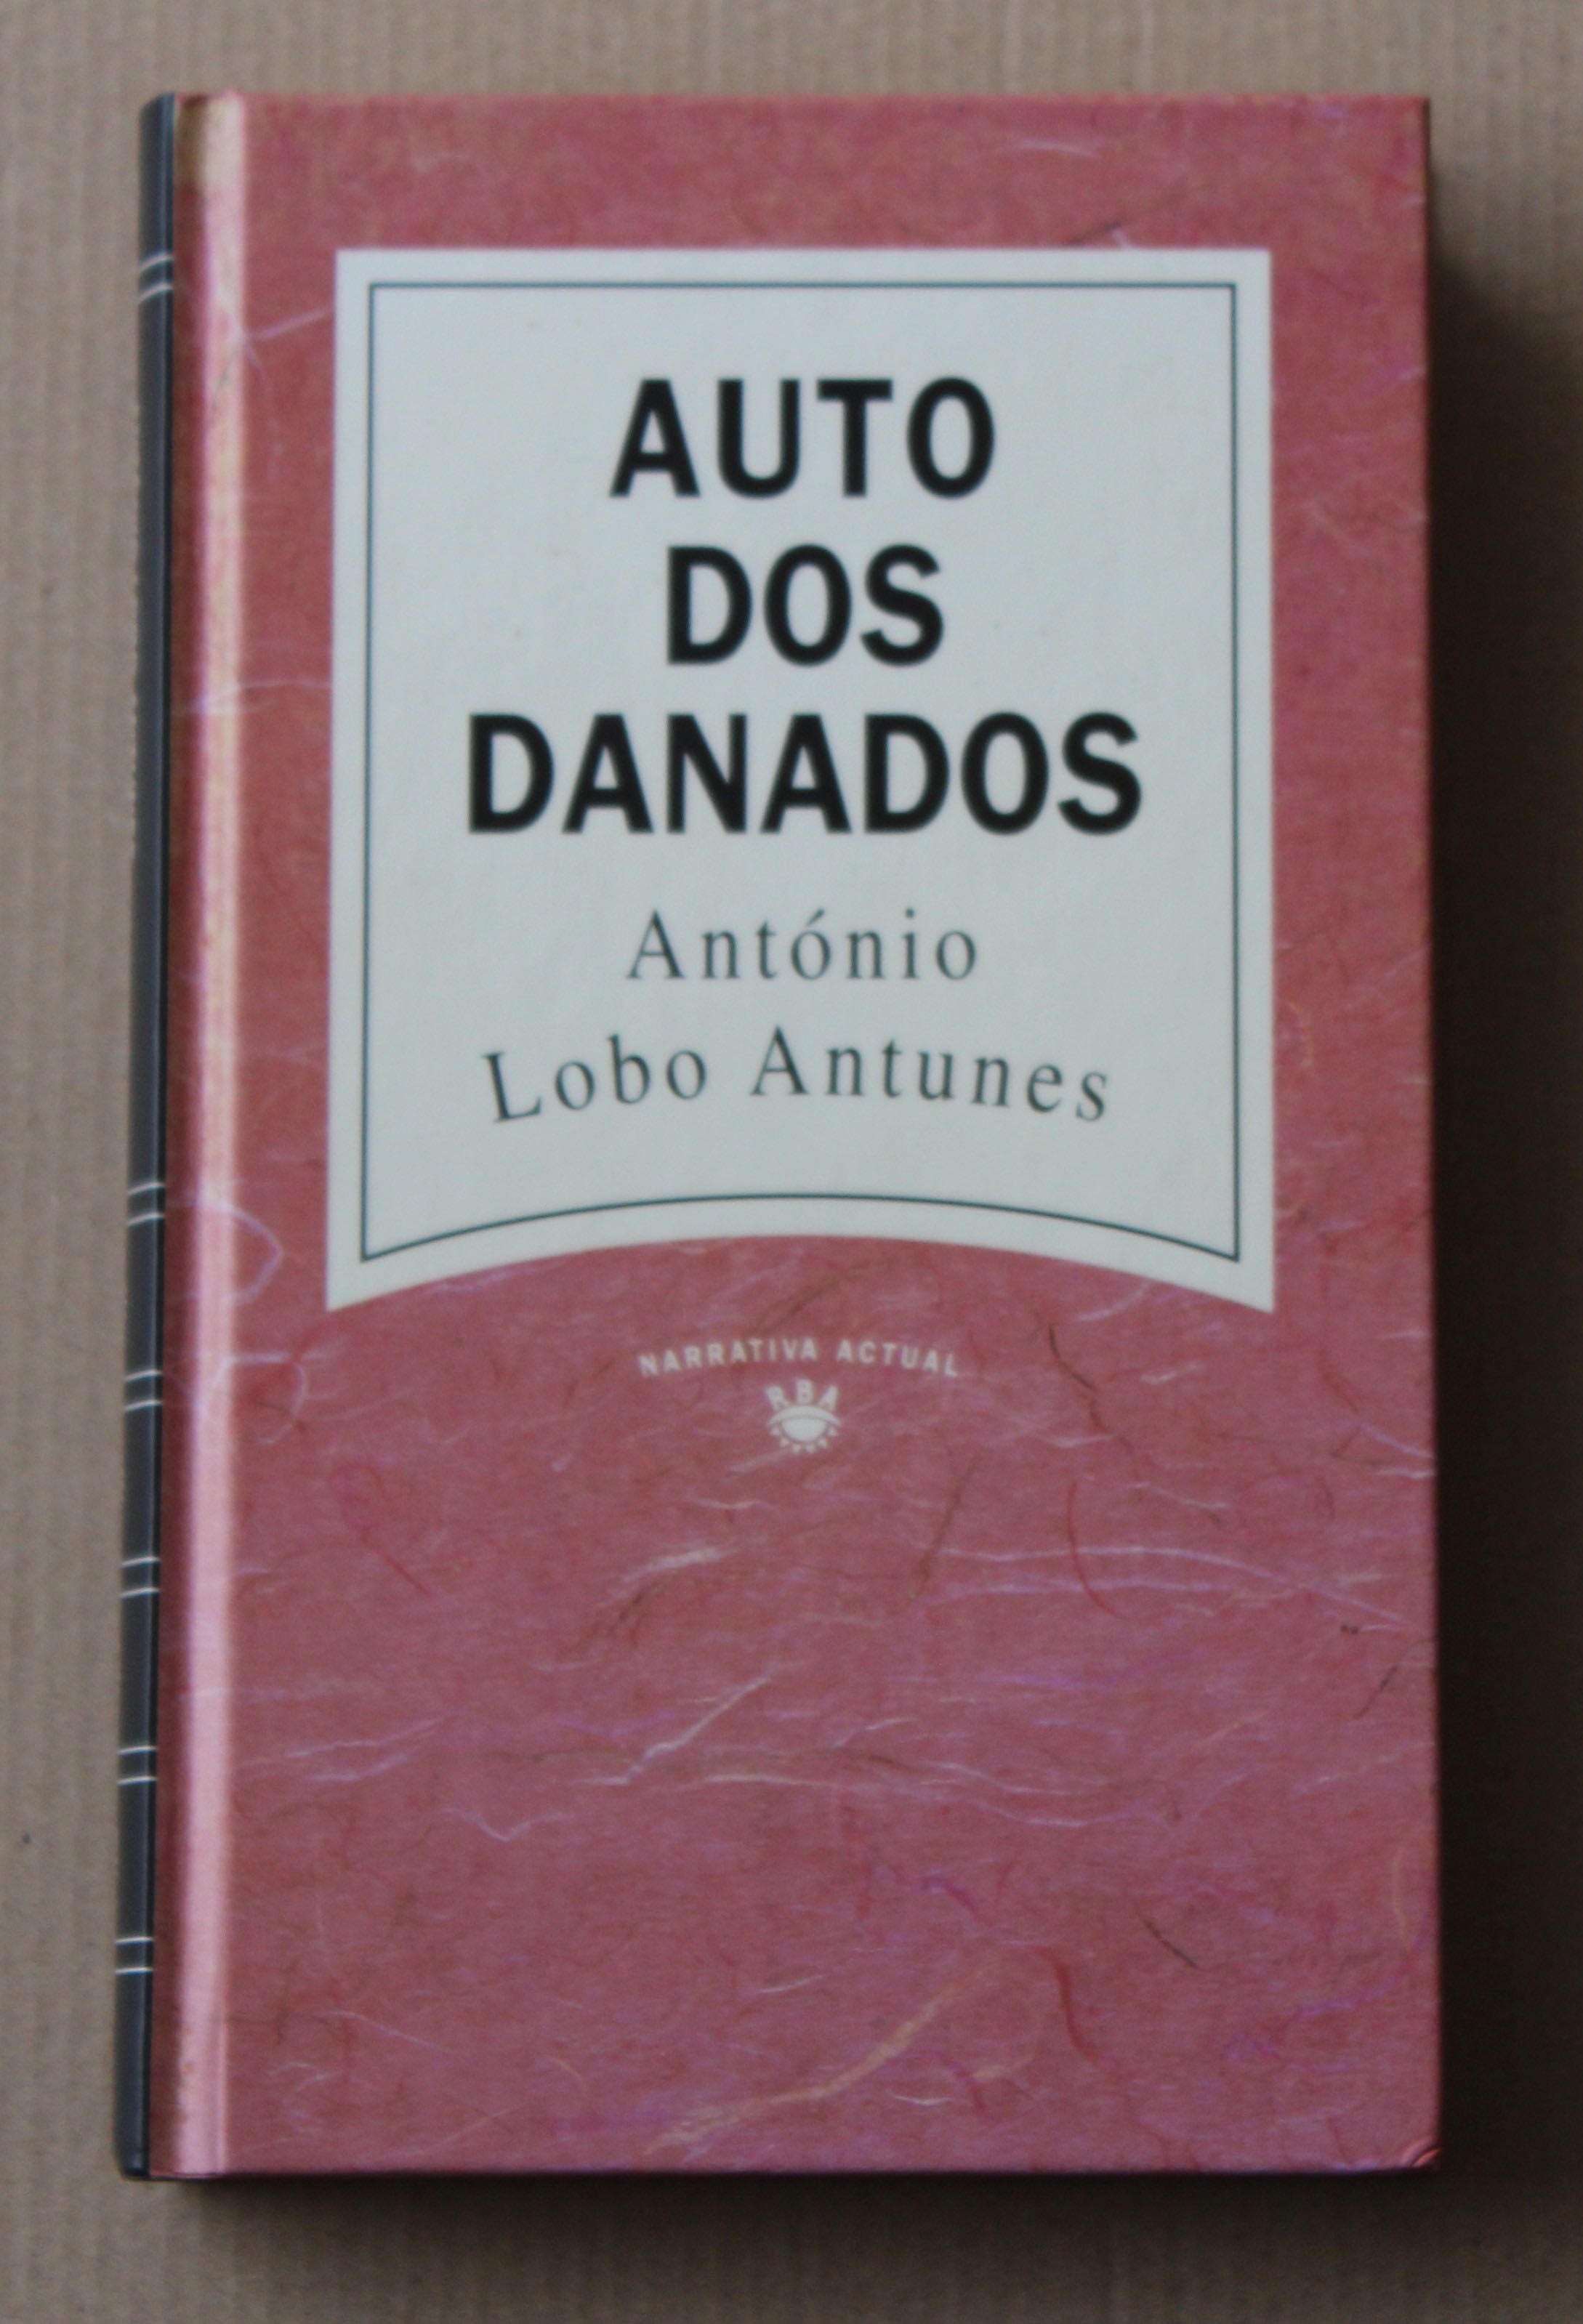 Livro "Auto Dos Danados", de António Lobo Antunes